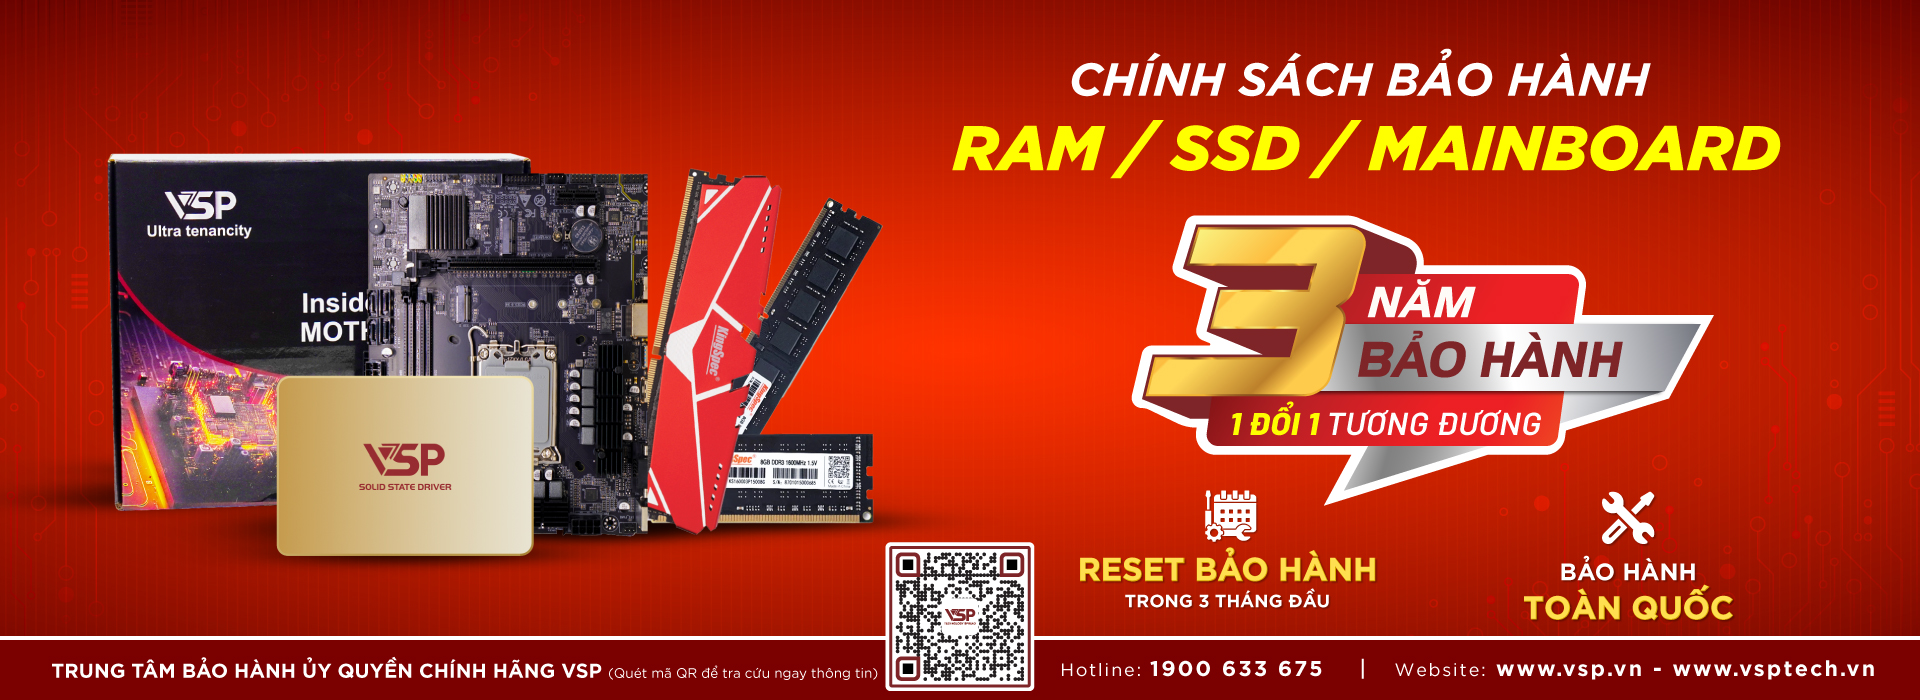 Bảo hành Ram SSD Mainboard